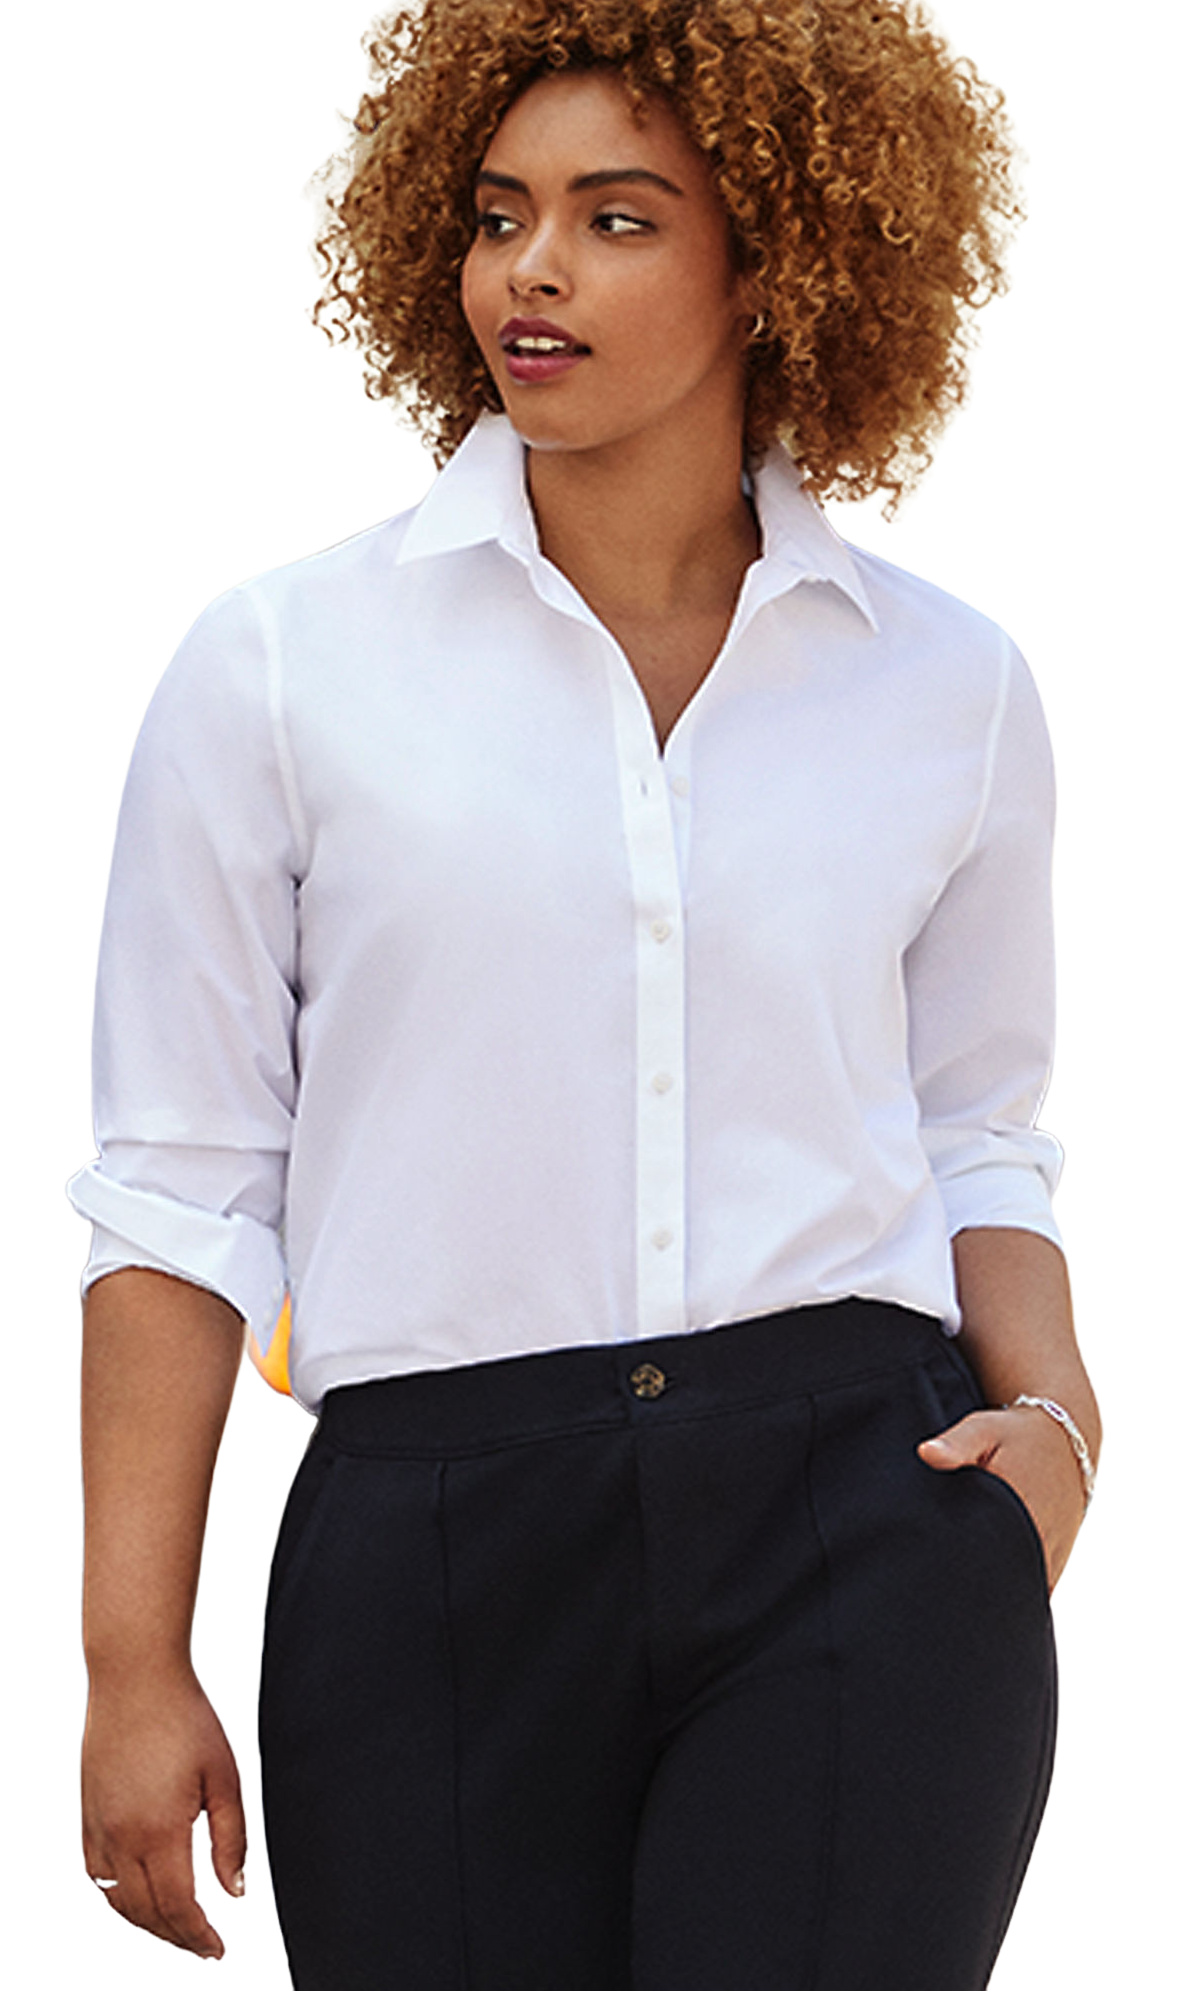 best-white-button-down-shirt-women